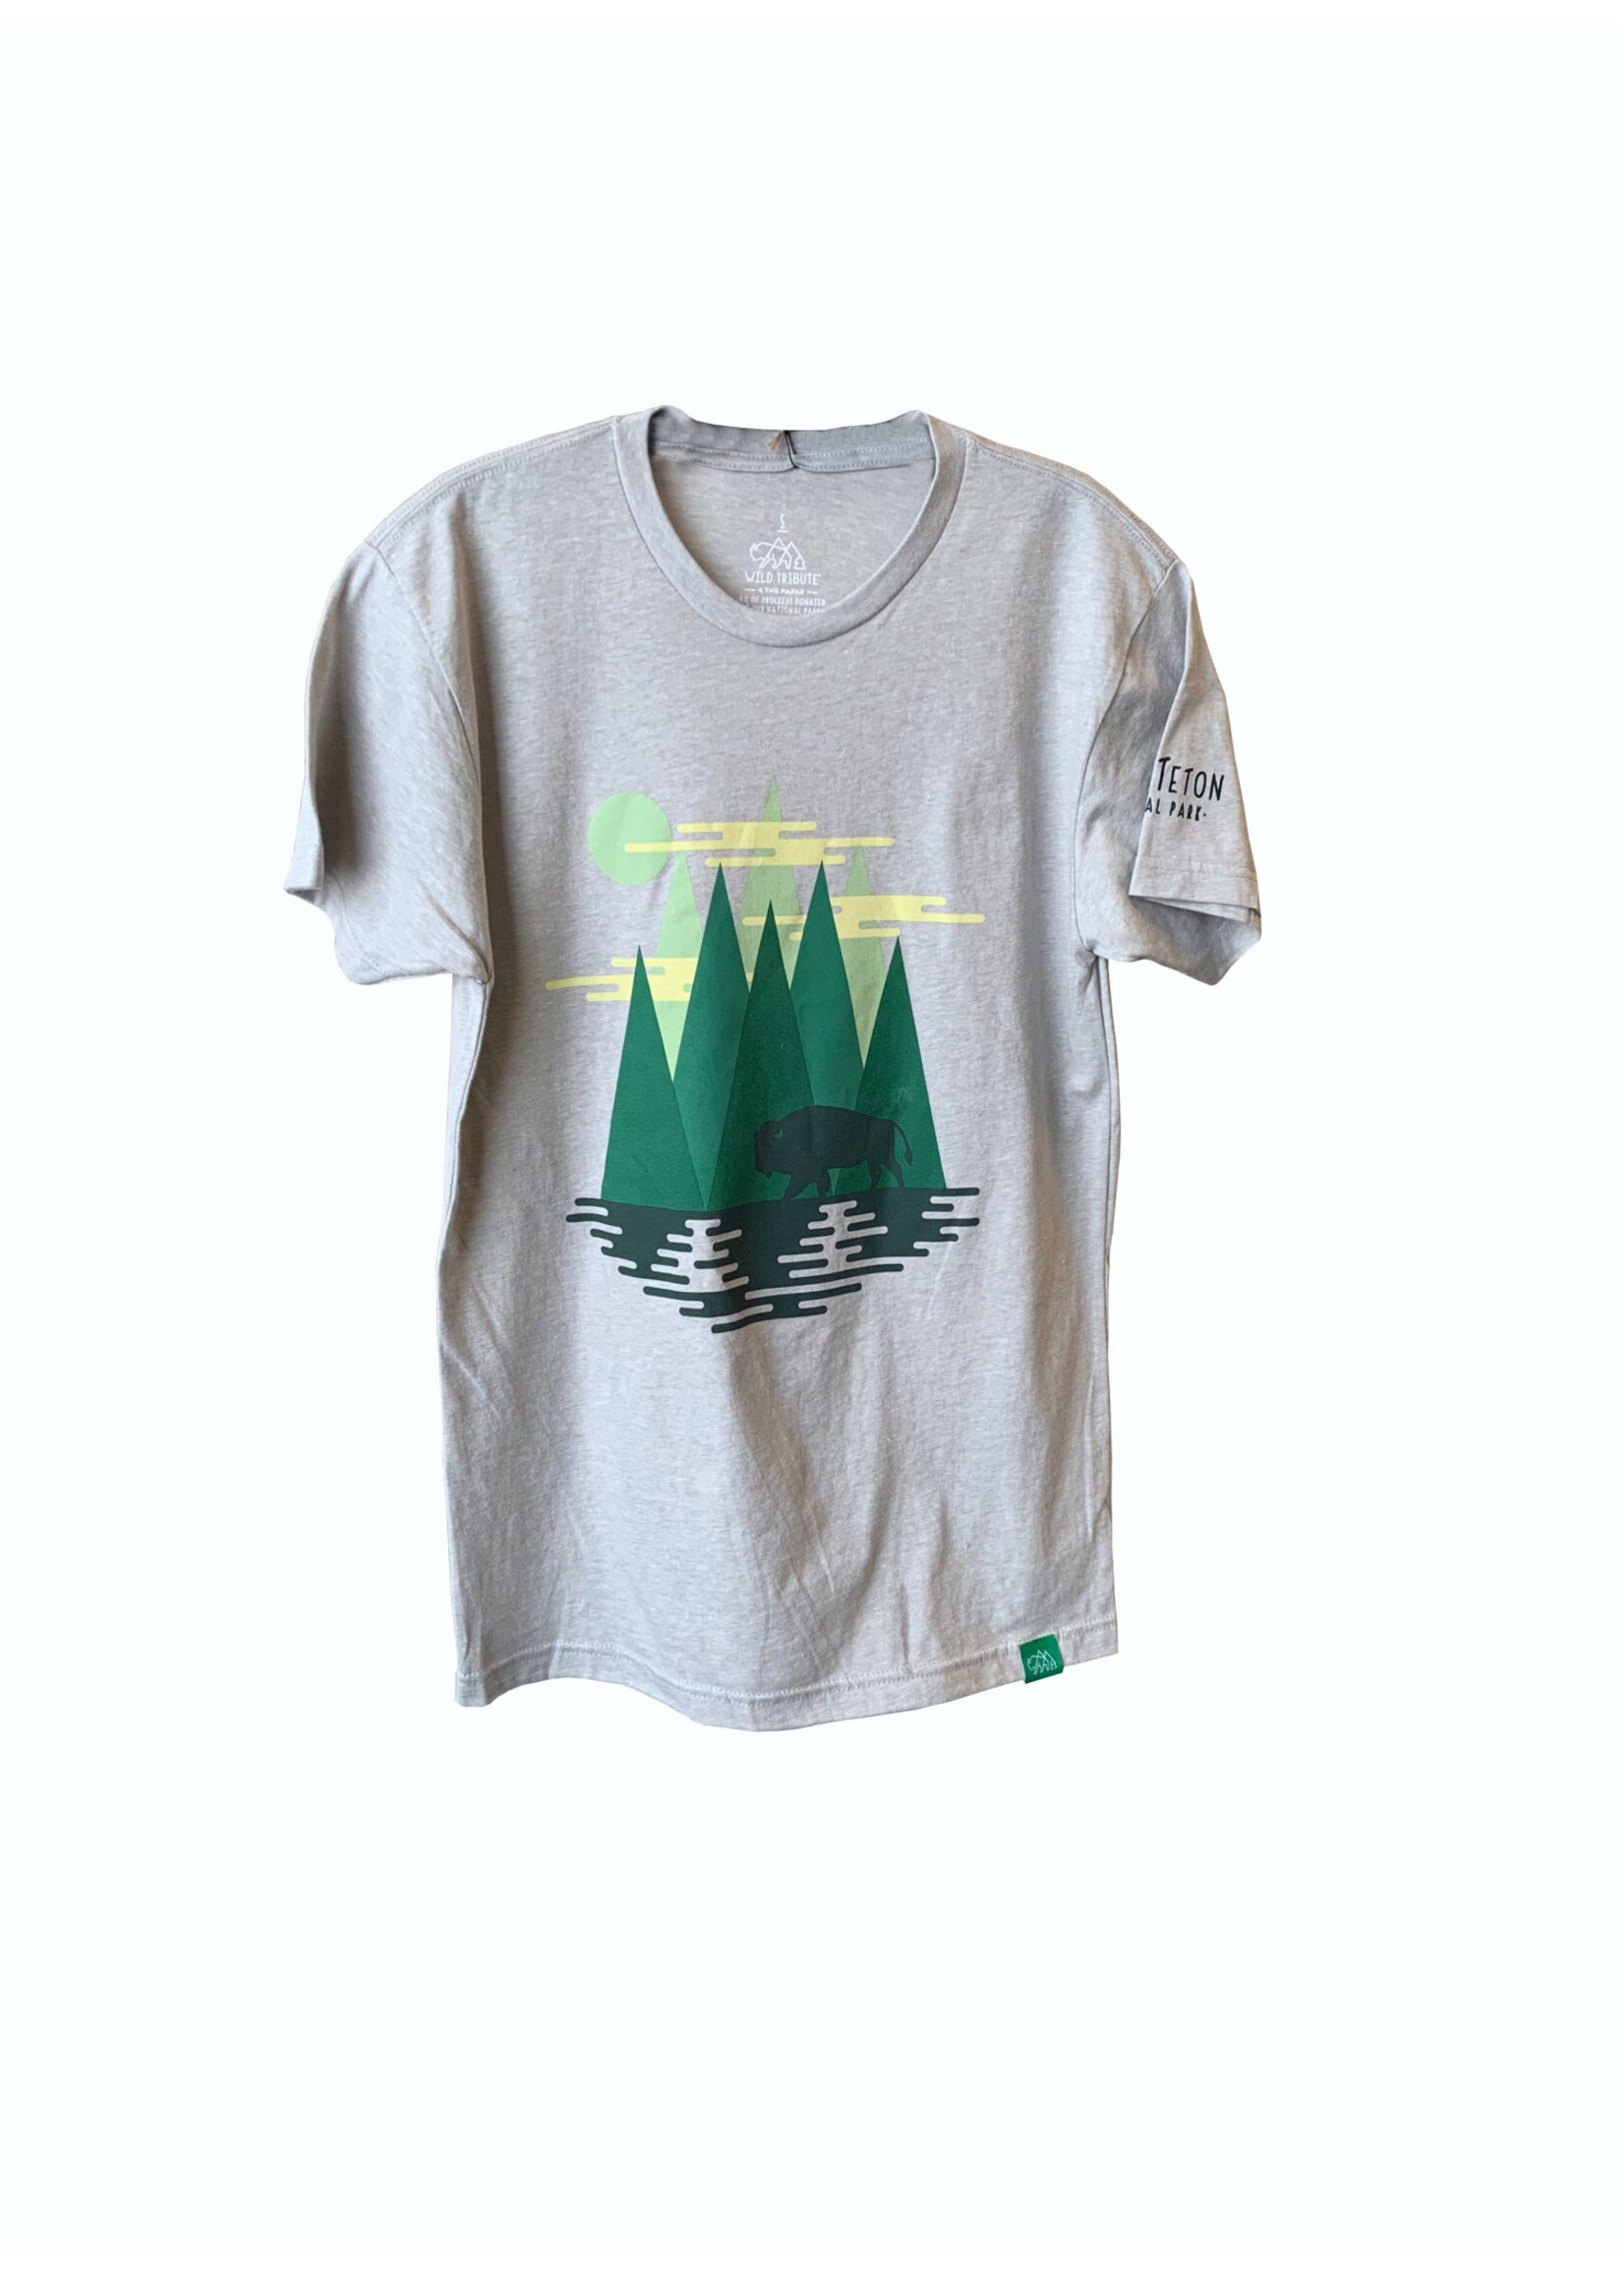 Grand Teton Wonderland Tshirt